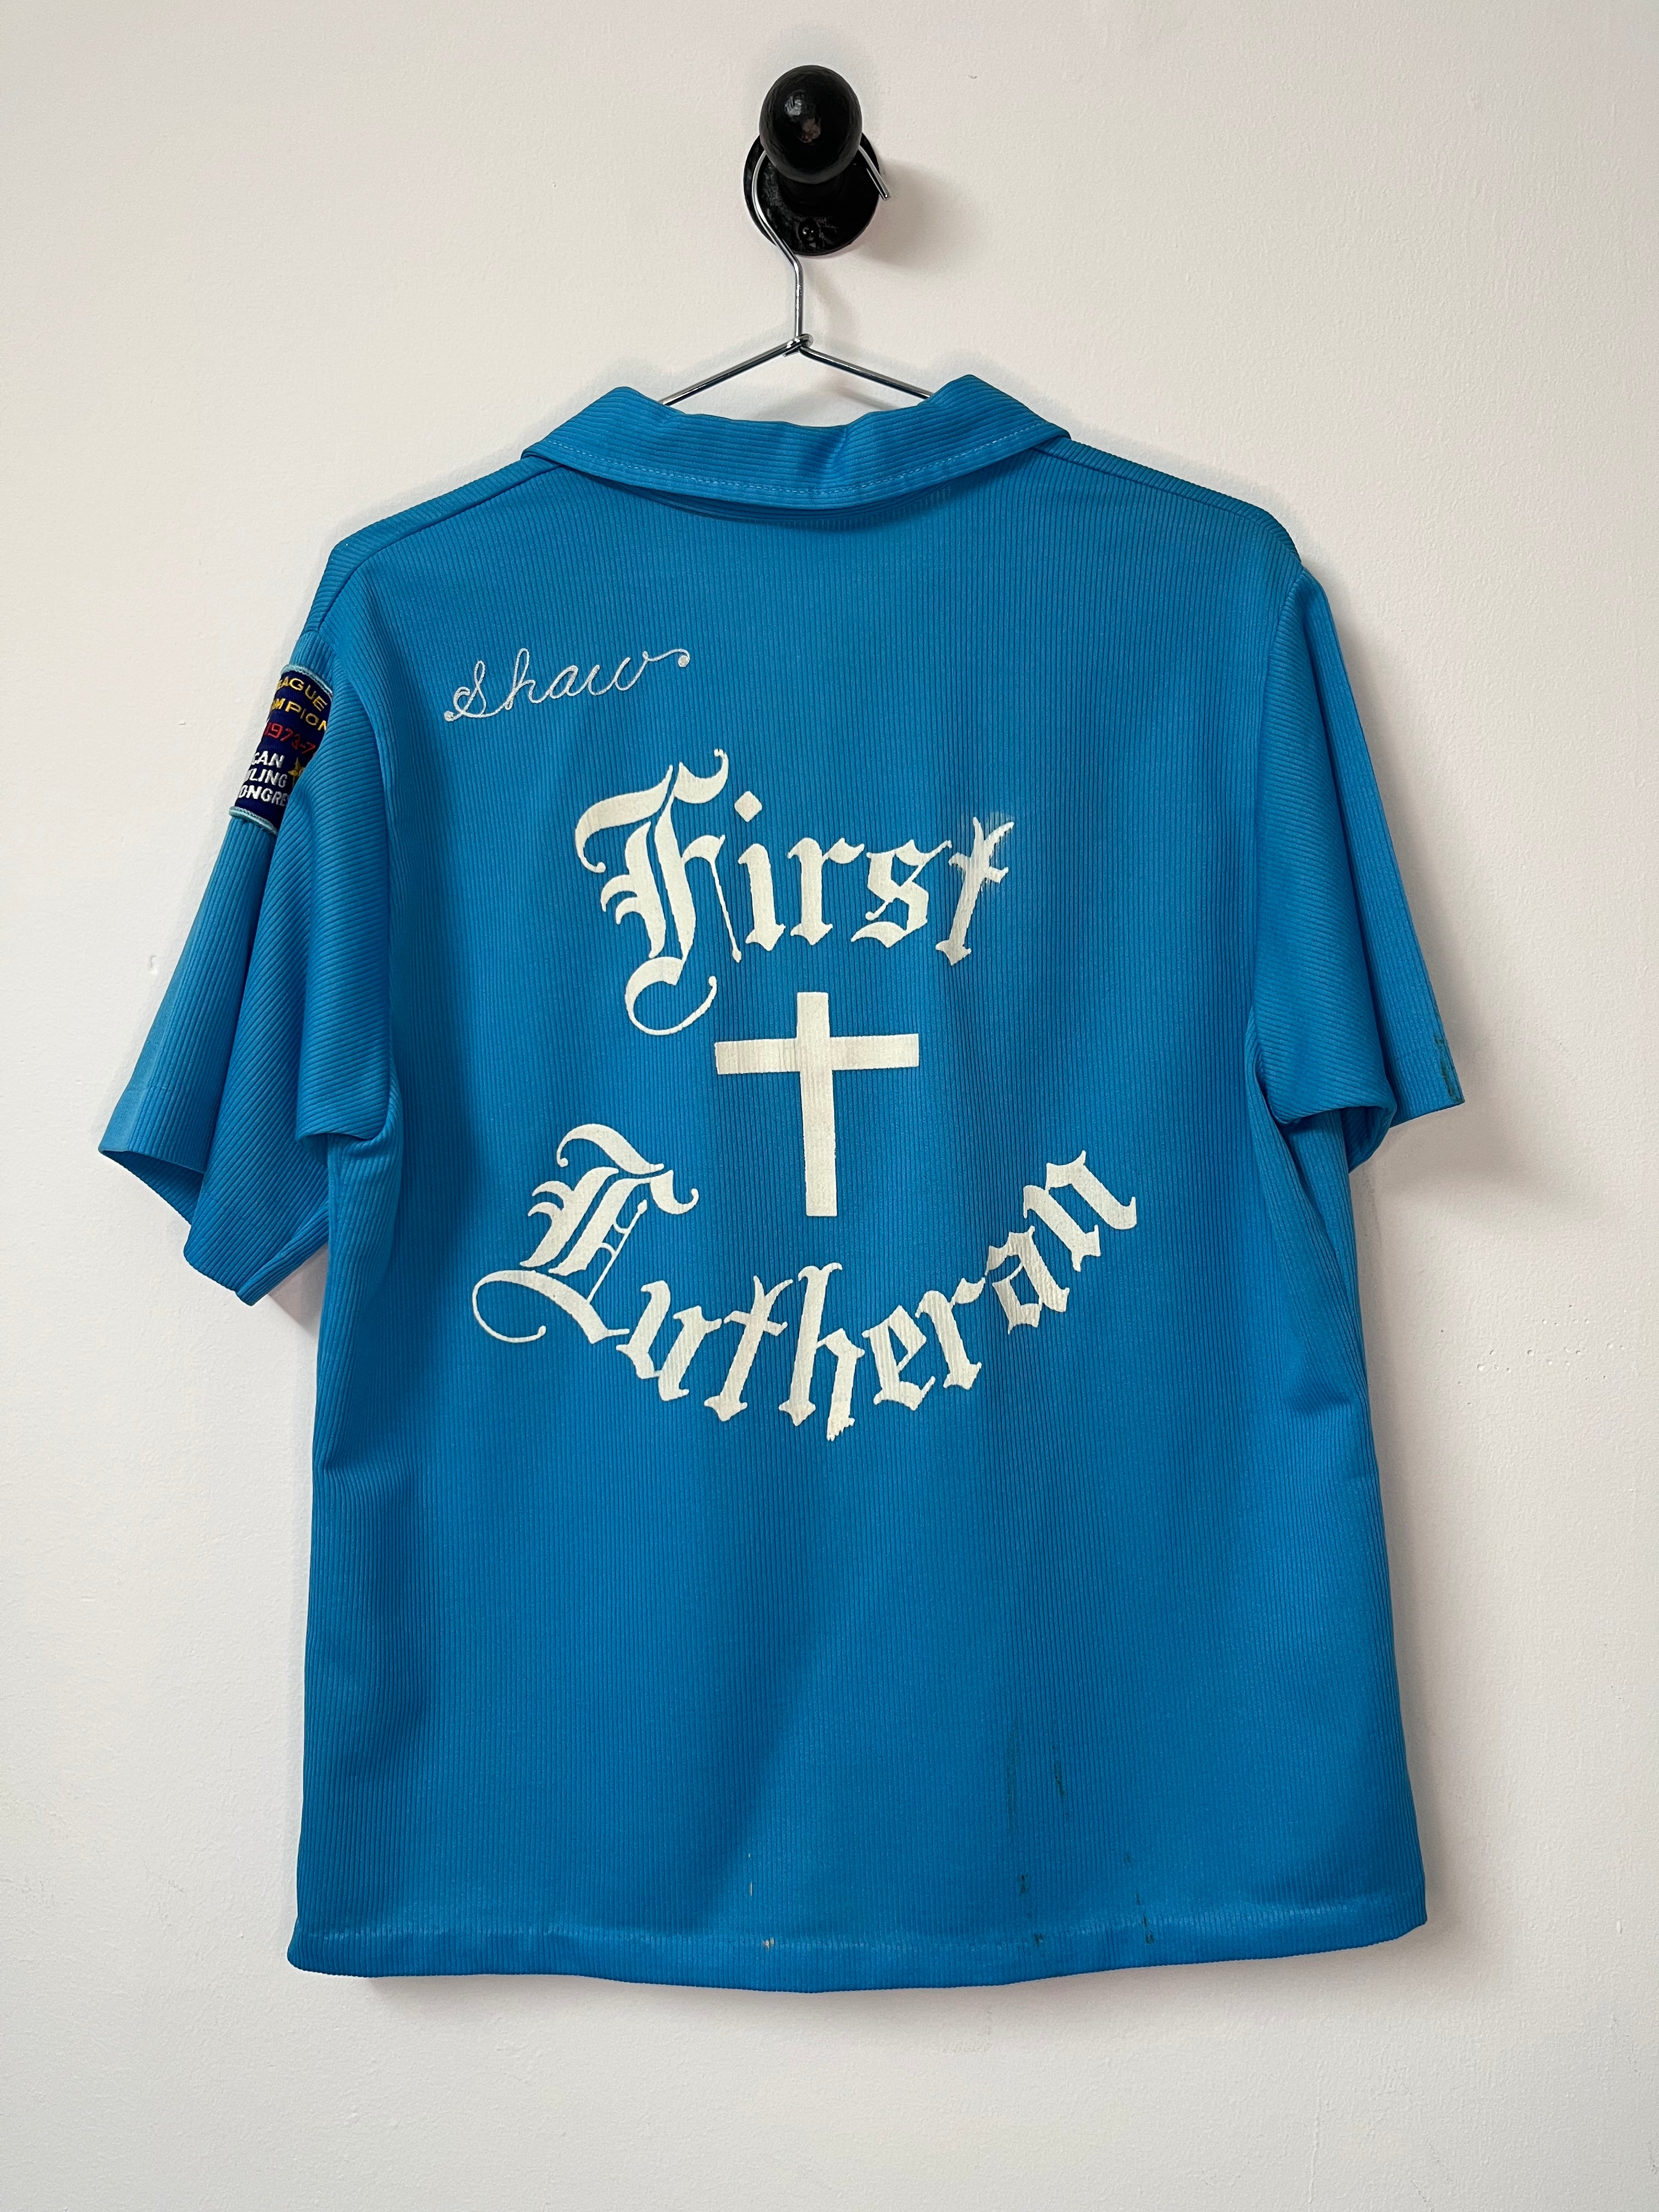 1973 ‘First Lutheran Church’ Quarter Zip Bowling Shirt - Swimming Pool Blue - M/L